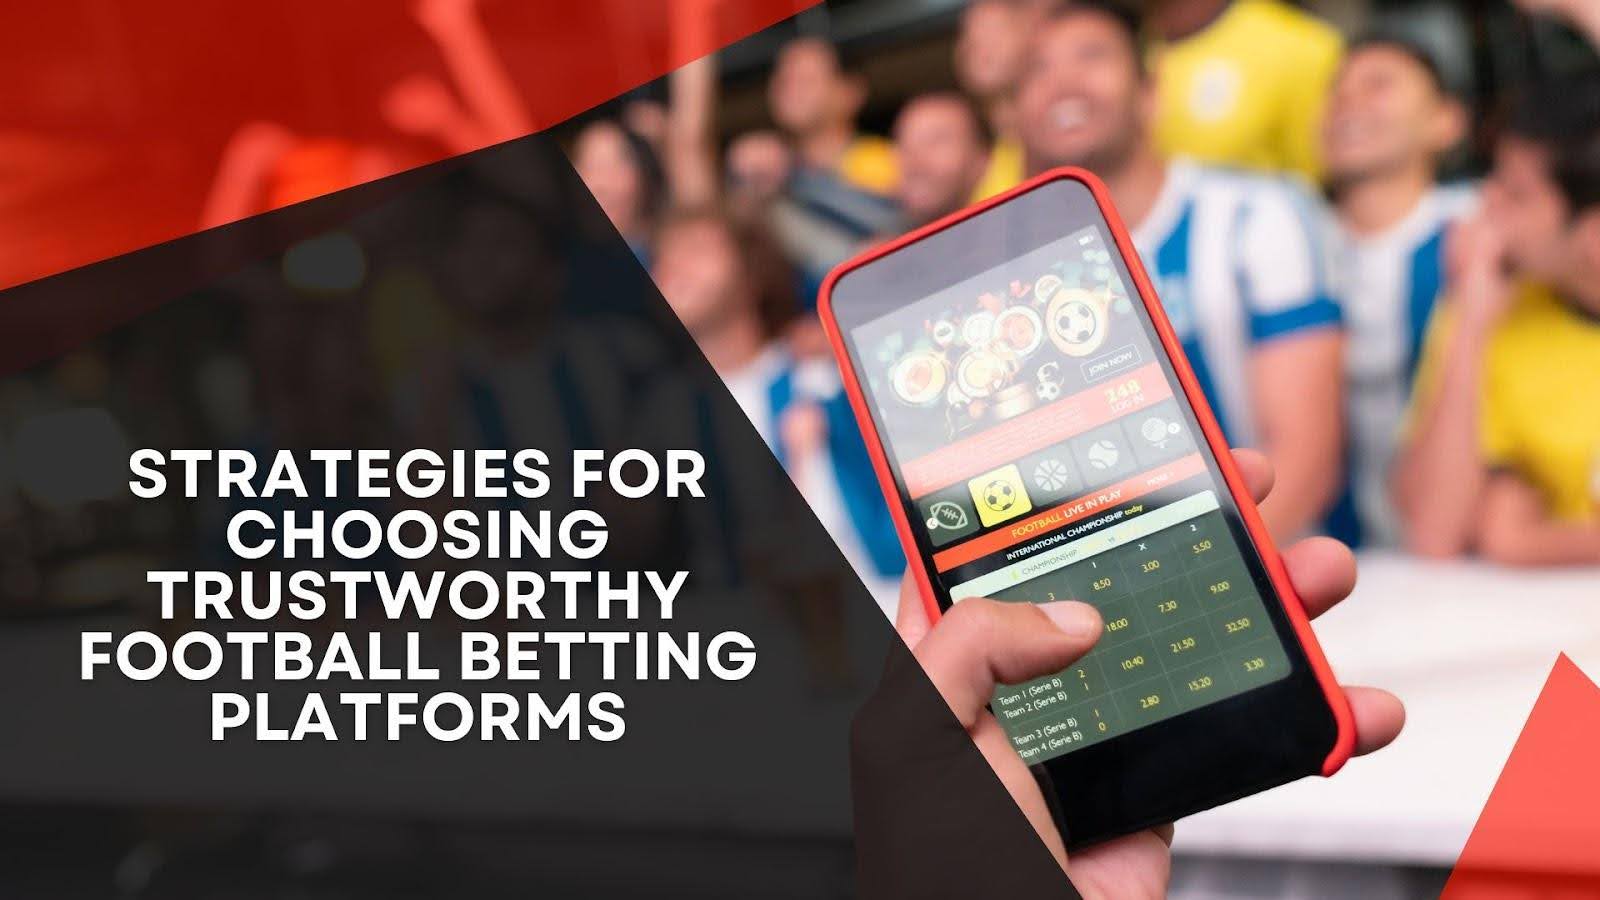 Strategies for Identifying Trustworthy Football Betting Platforms